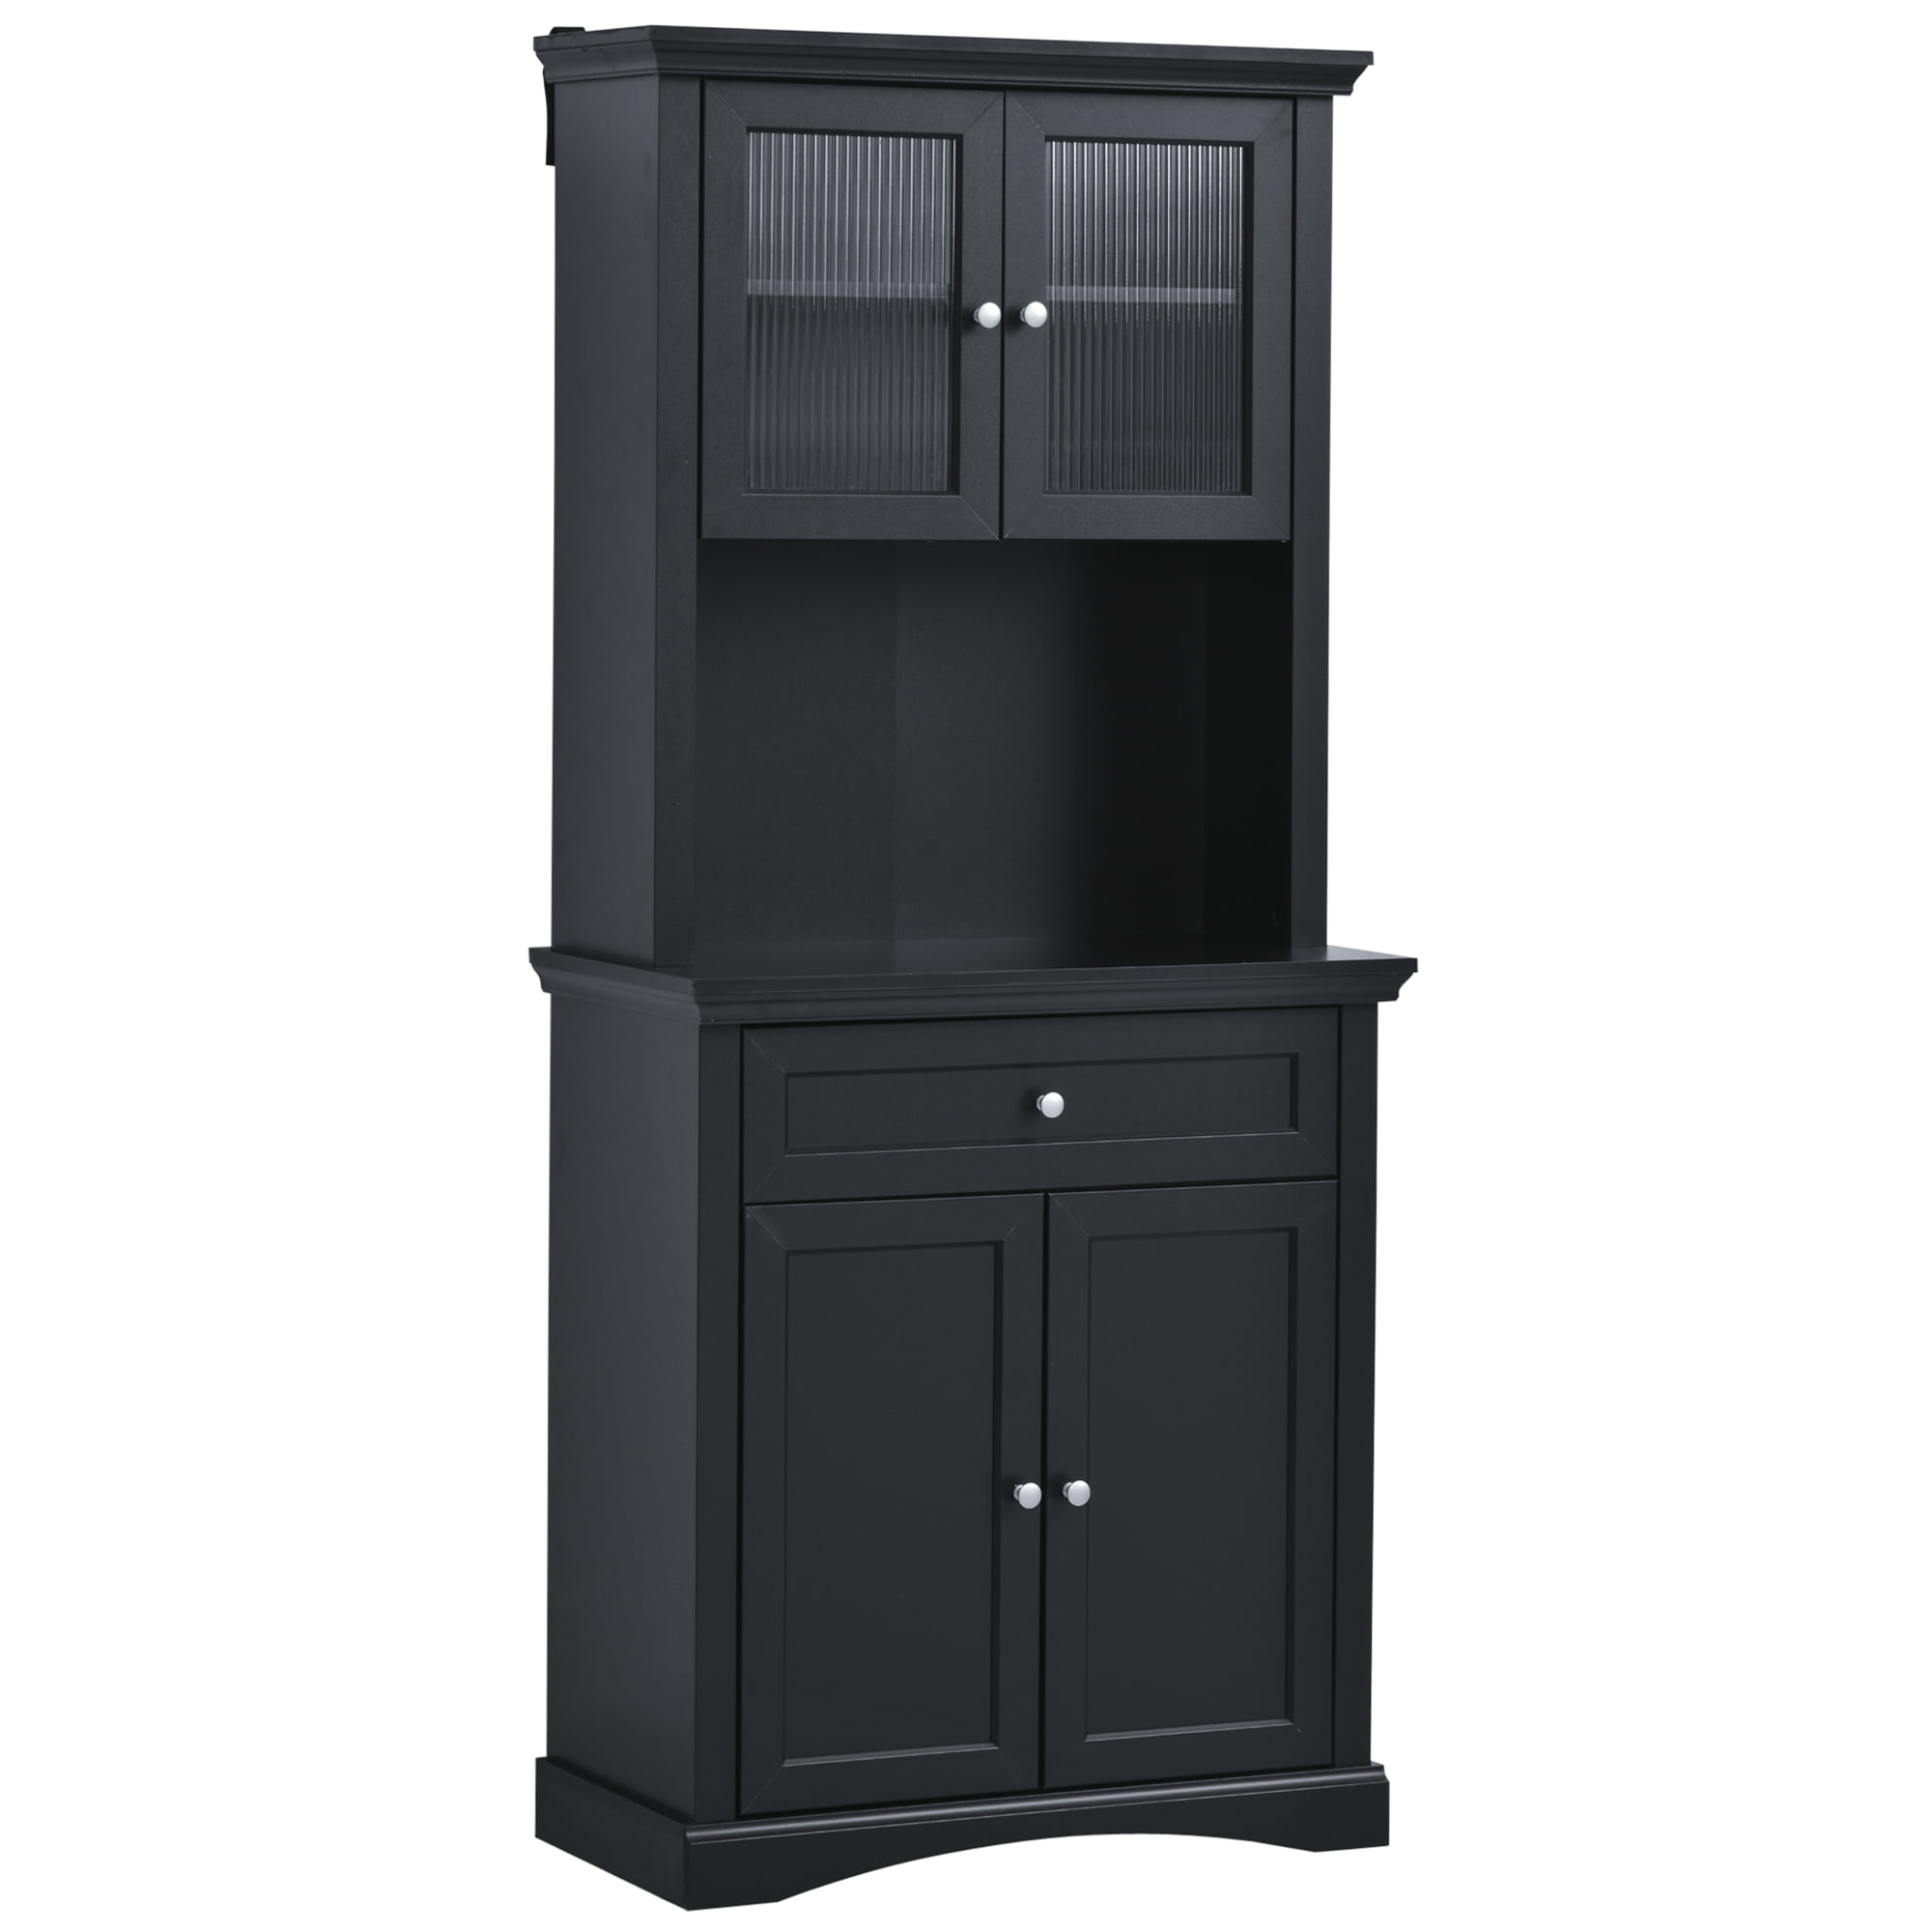 Homcom Freestanding Kitchen Pantry, Adjustable Sliding Cabinet Shelves